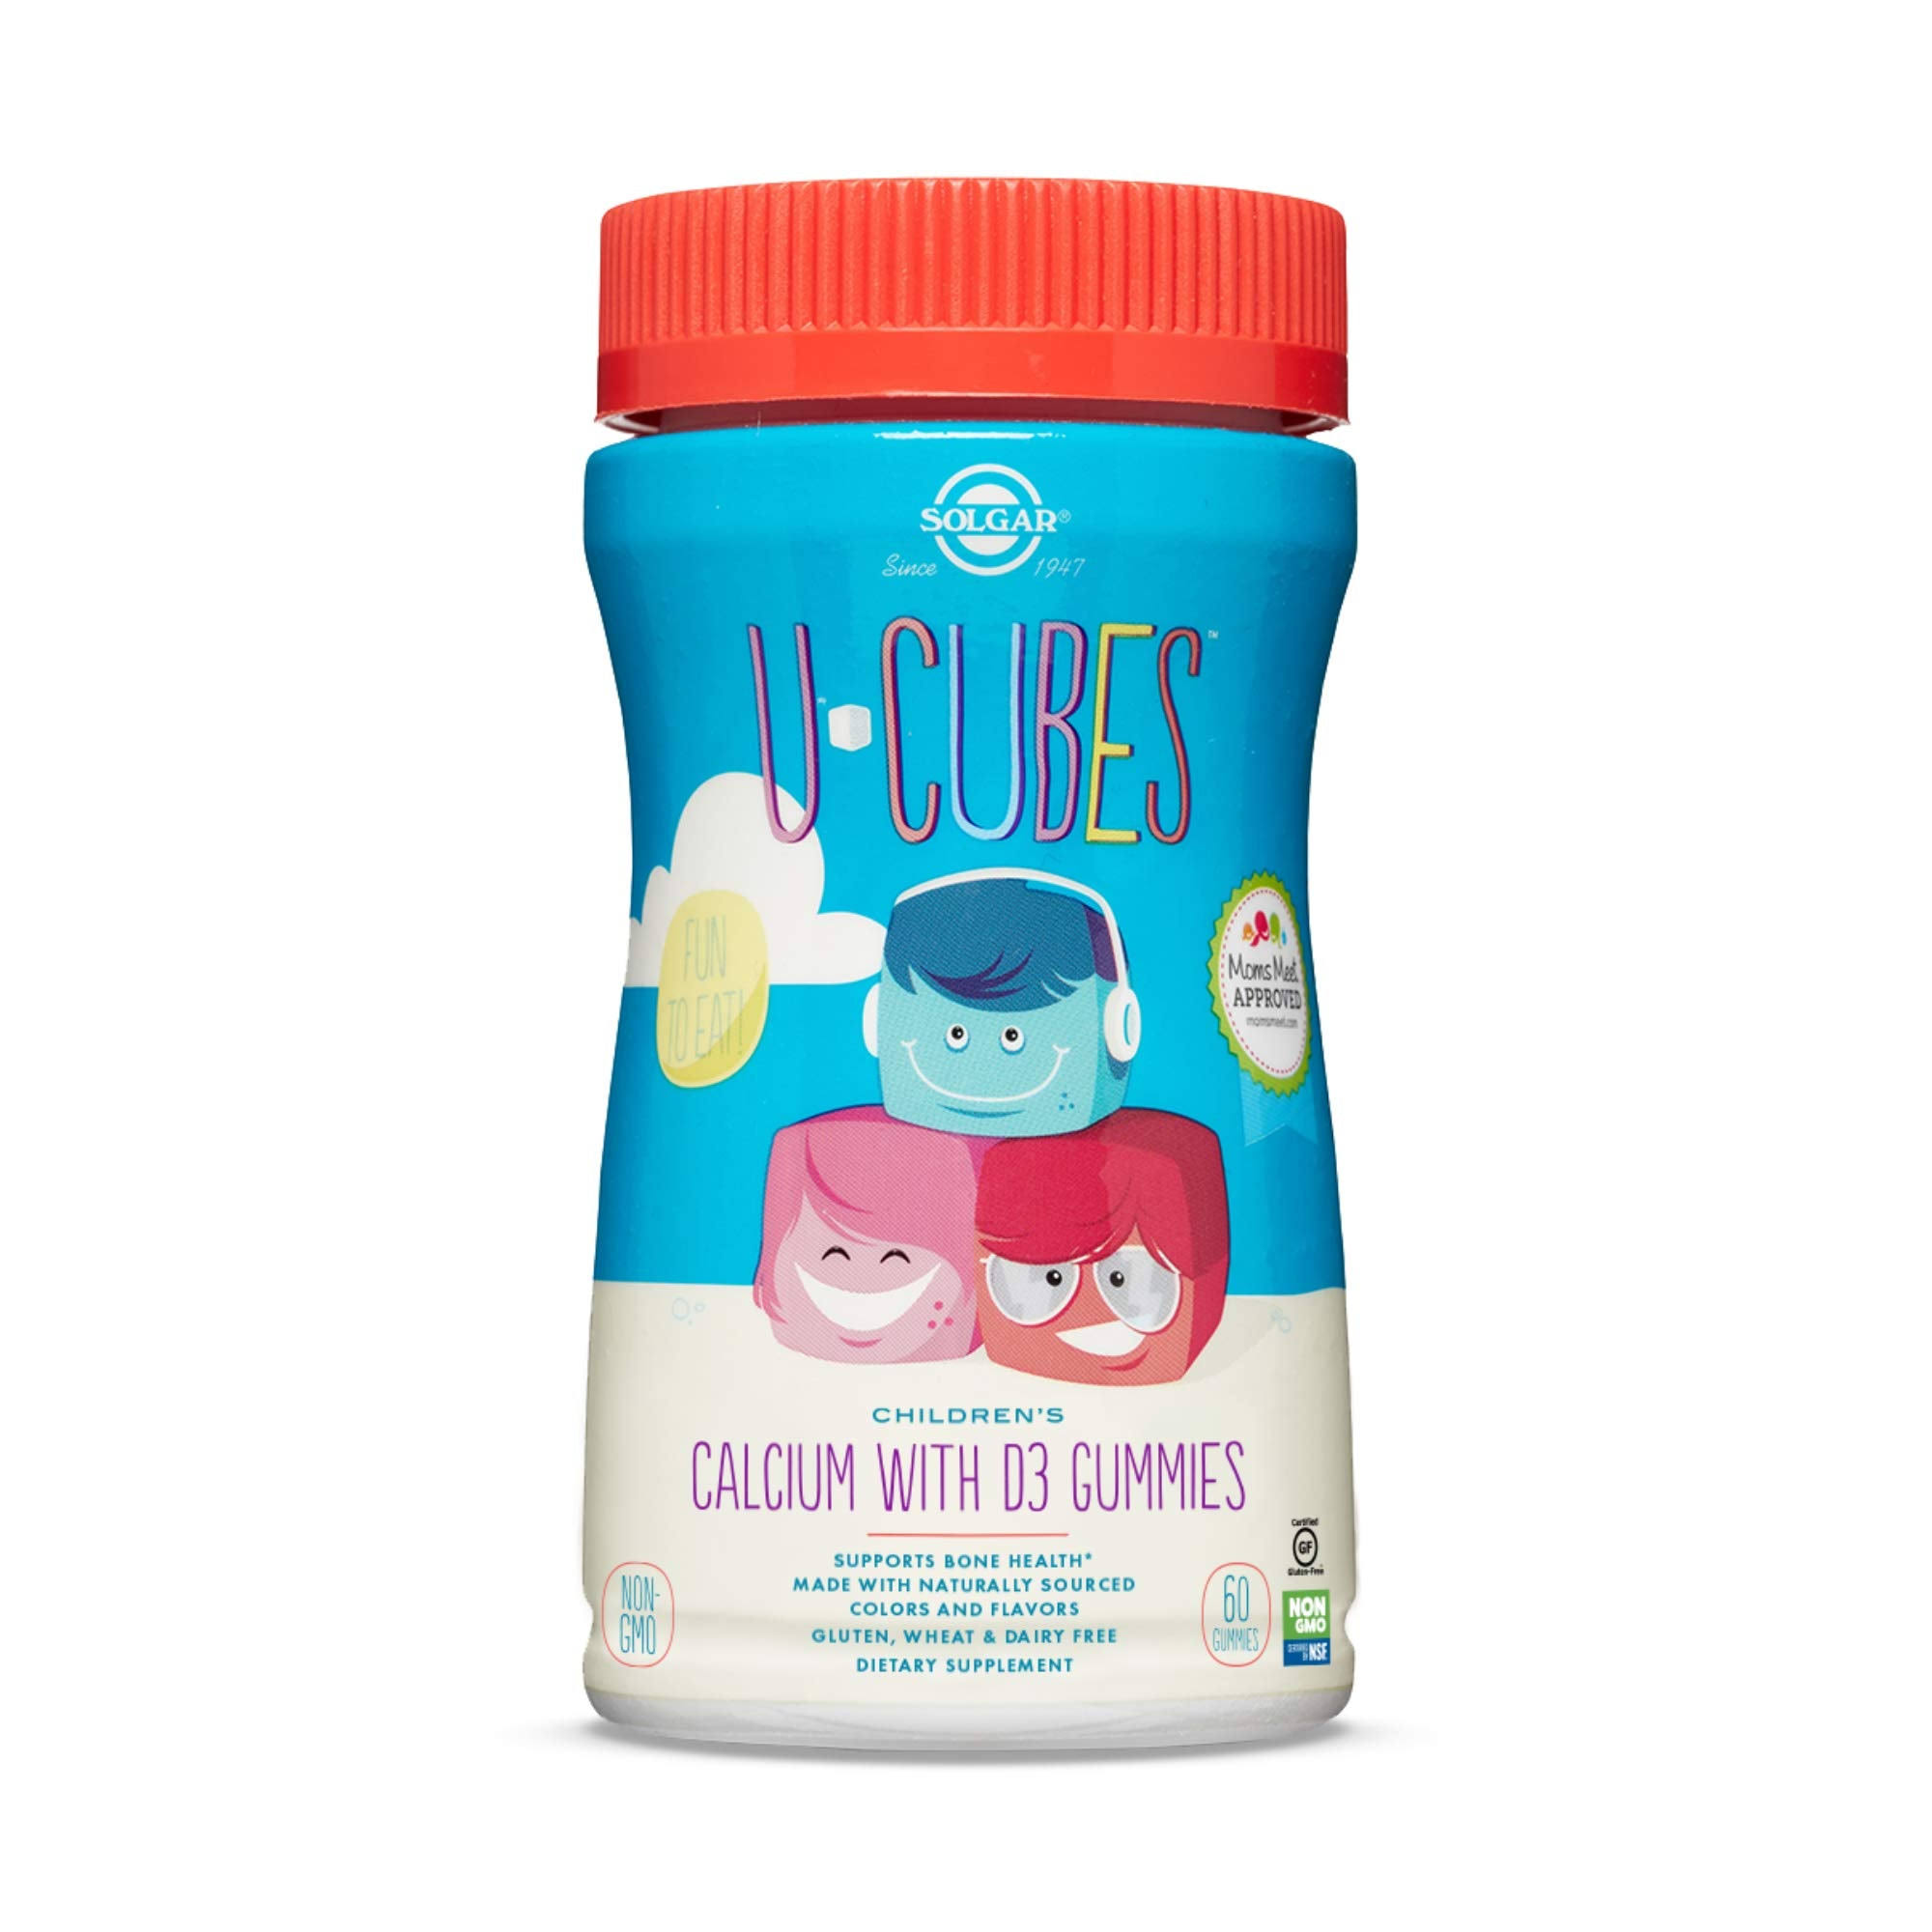 Solgar U-Cubes Children's Calcium With D3 Gummies Supplement - 60ct